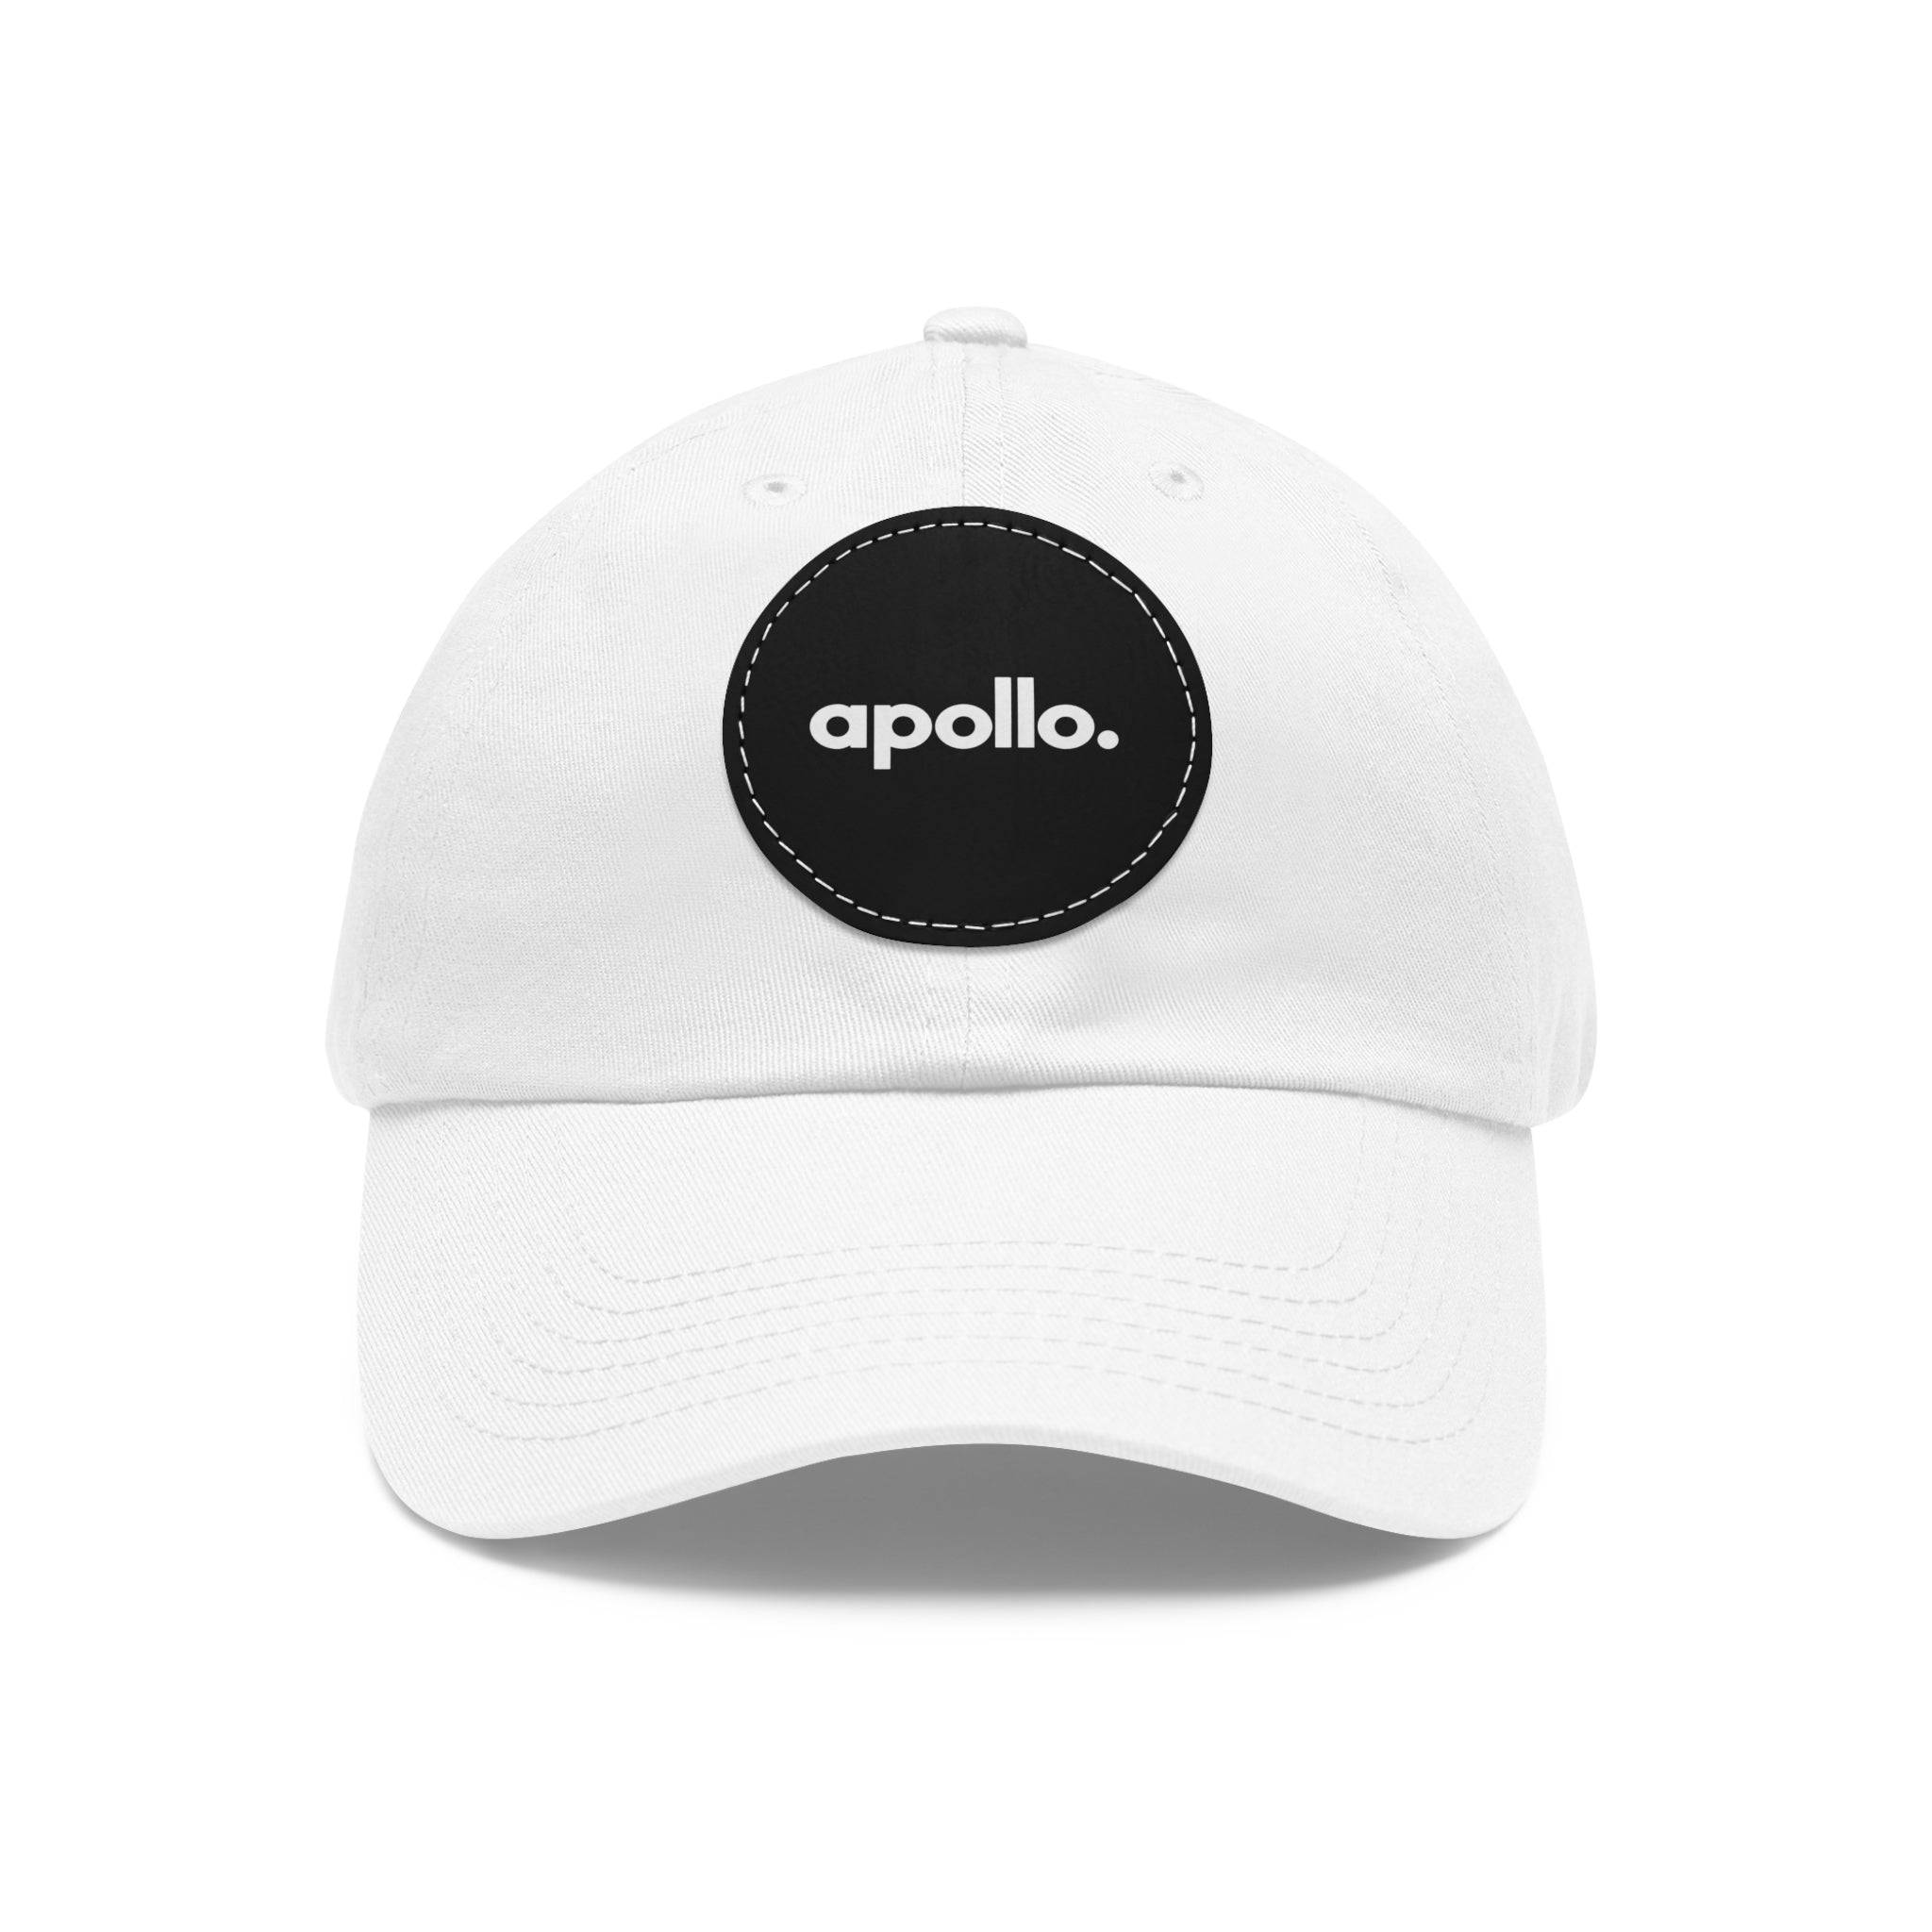 Apollo Dad Hat with Leather Patch (Round) - Apollo Moda